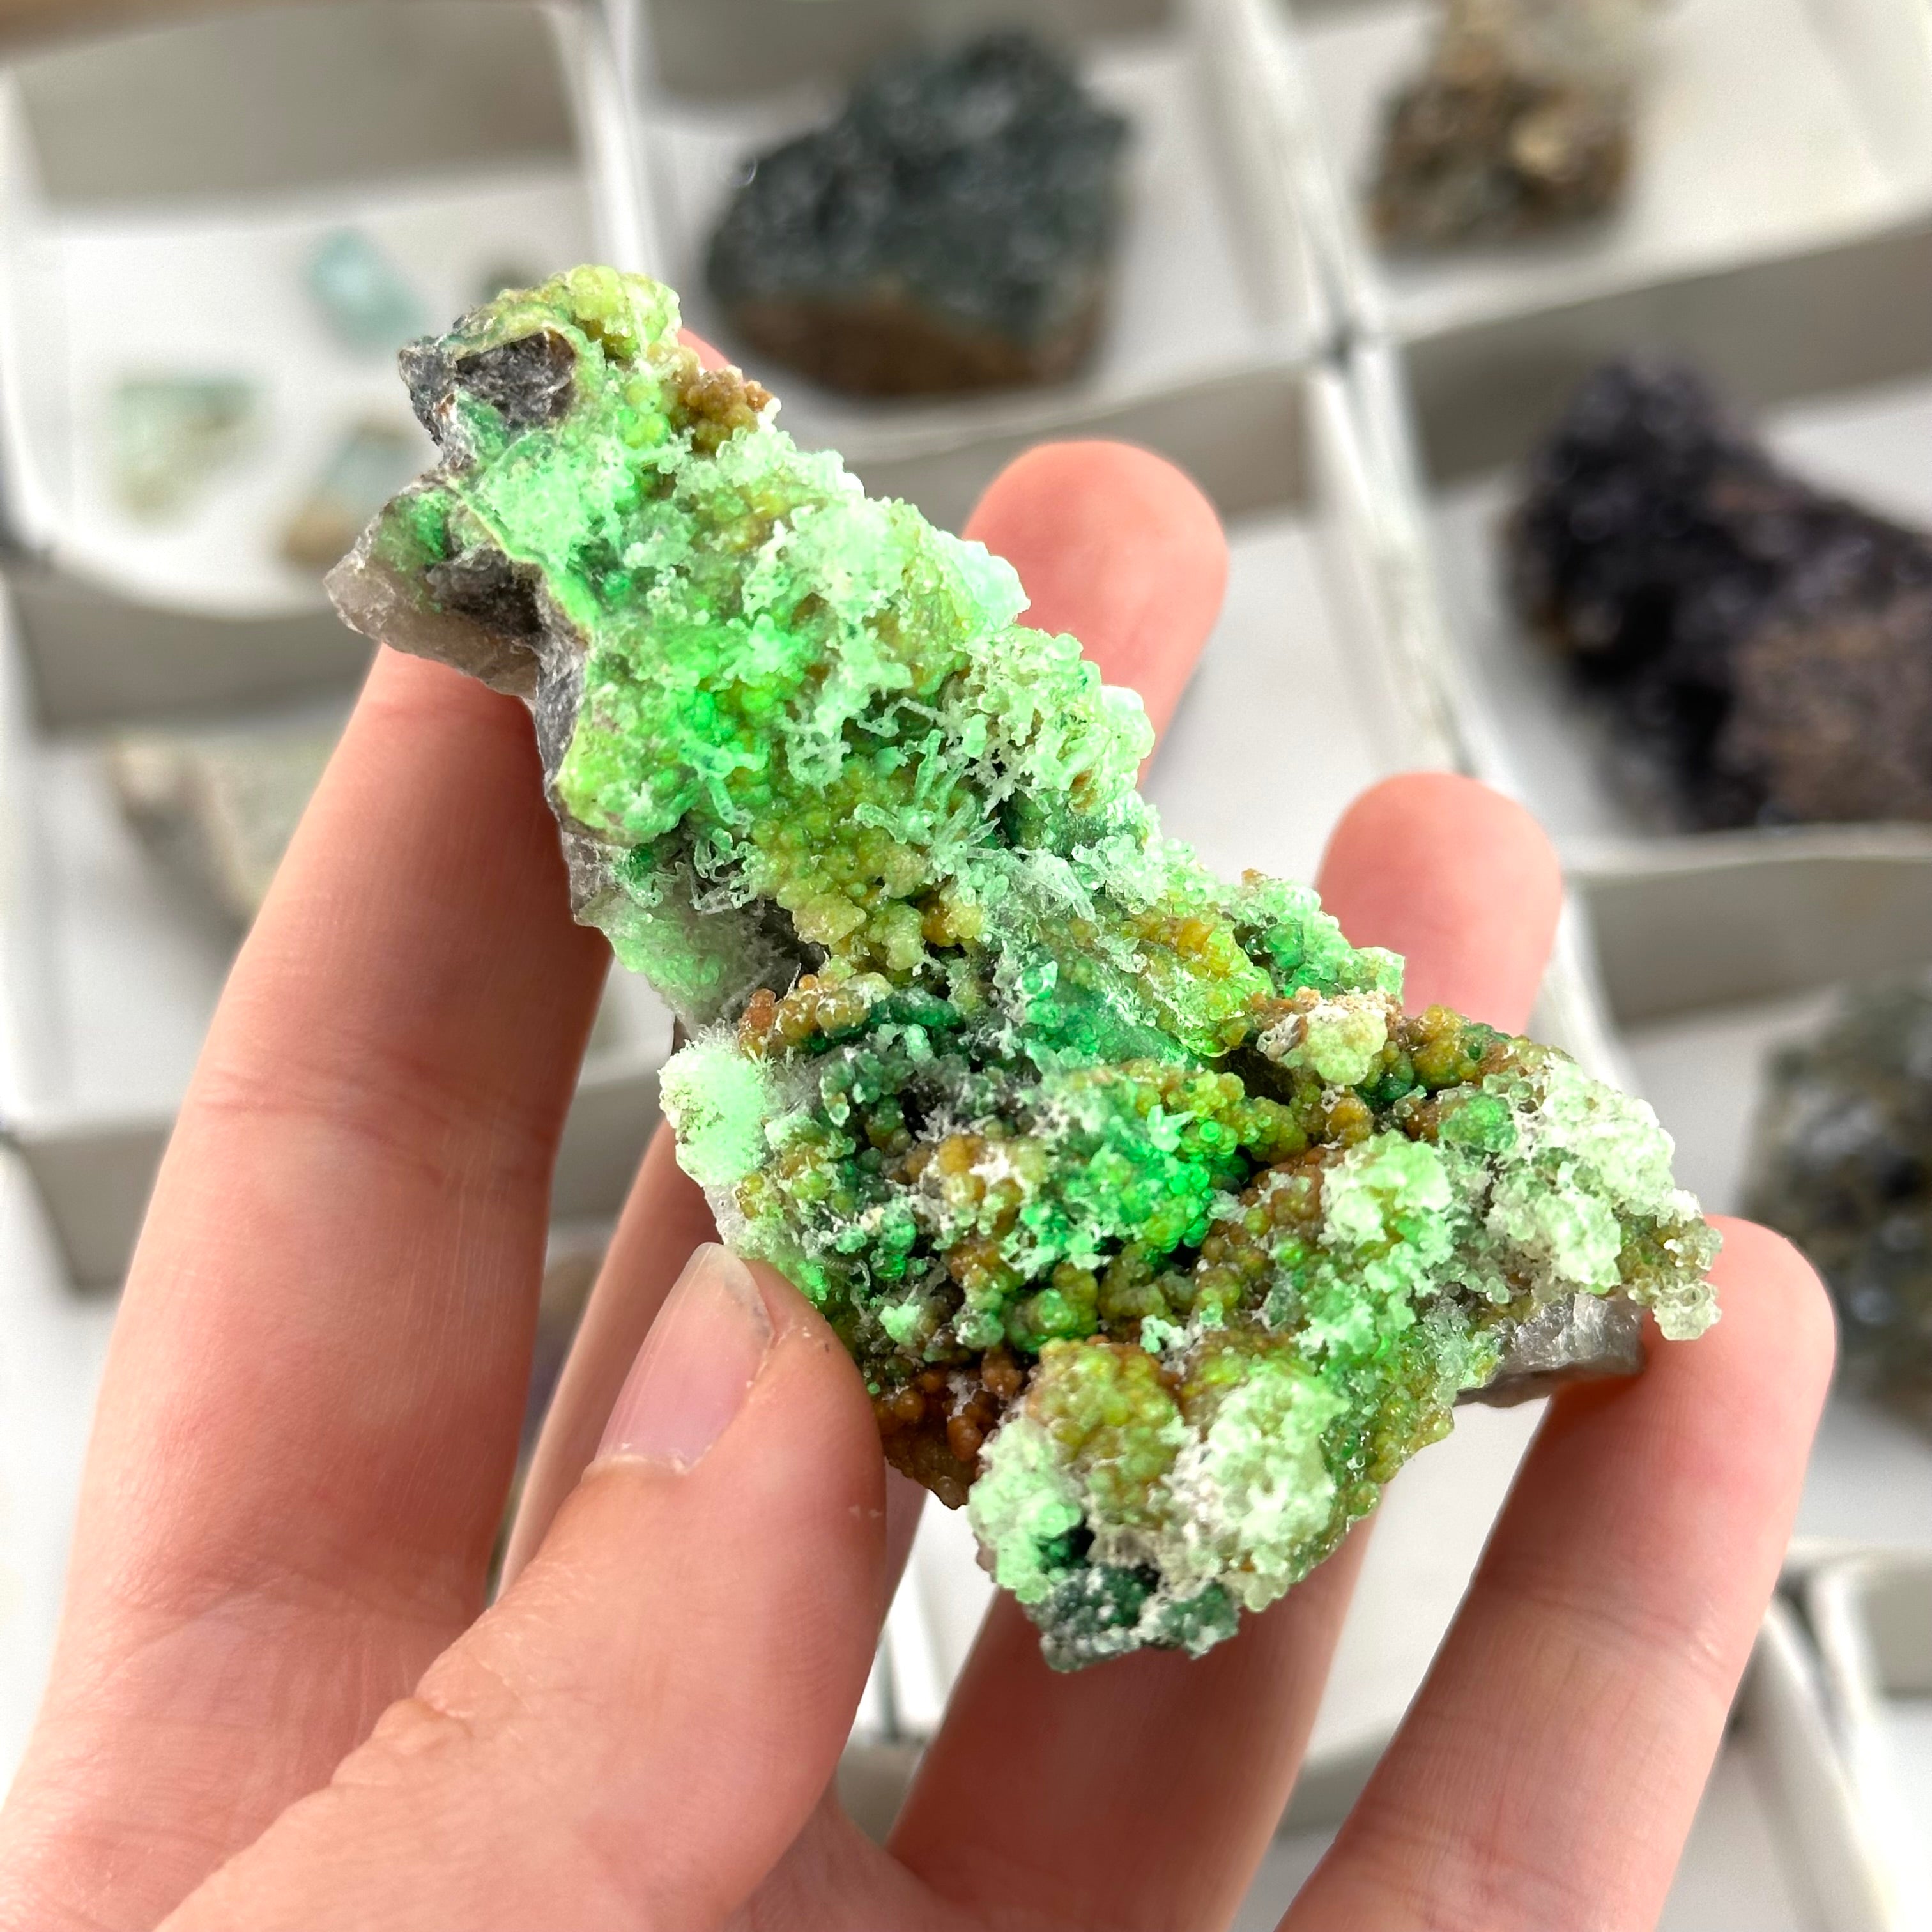 20 Piece/ 500g Flat of Mixed Minerals from Namibia | Okorusu Fluorite, Aquamarine, Hyalite Opal, Amethyst, Smoky Quartz